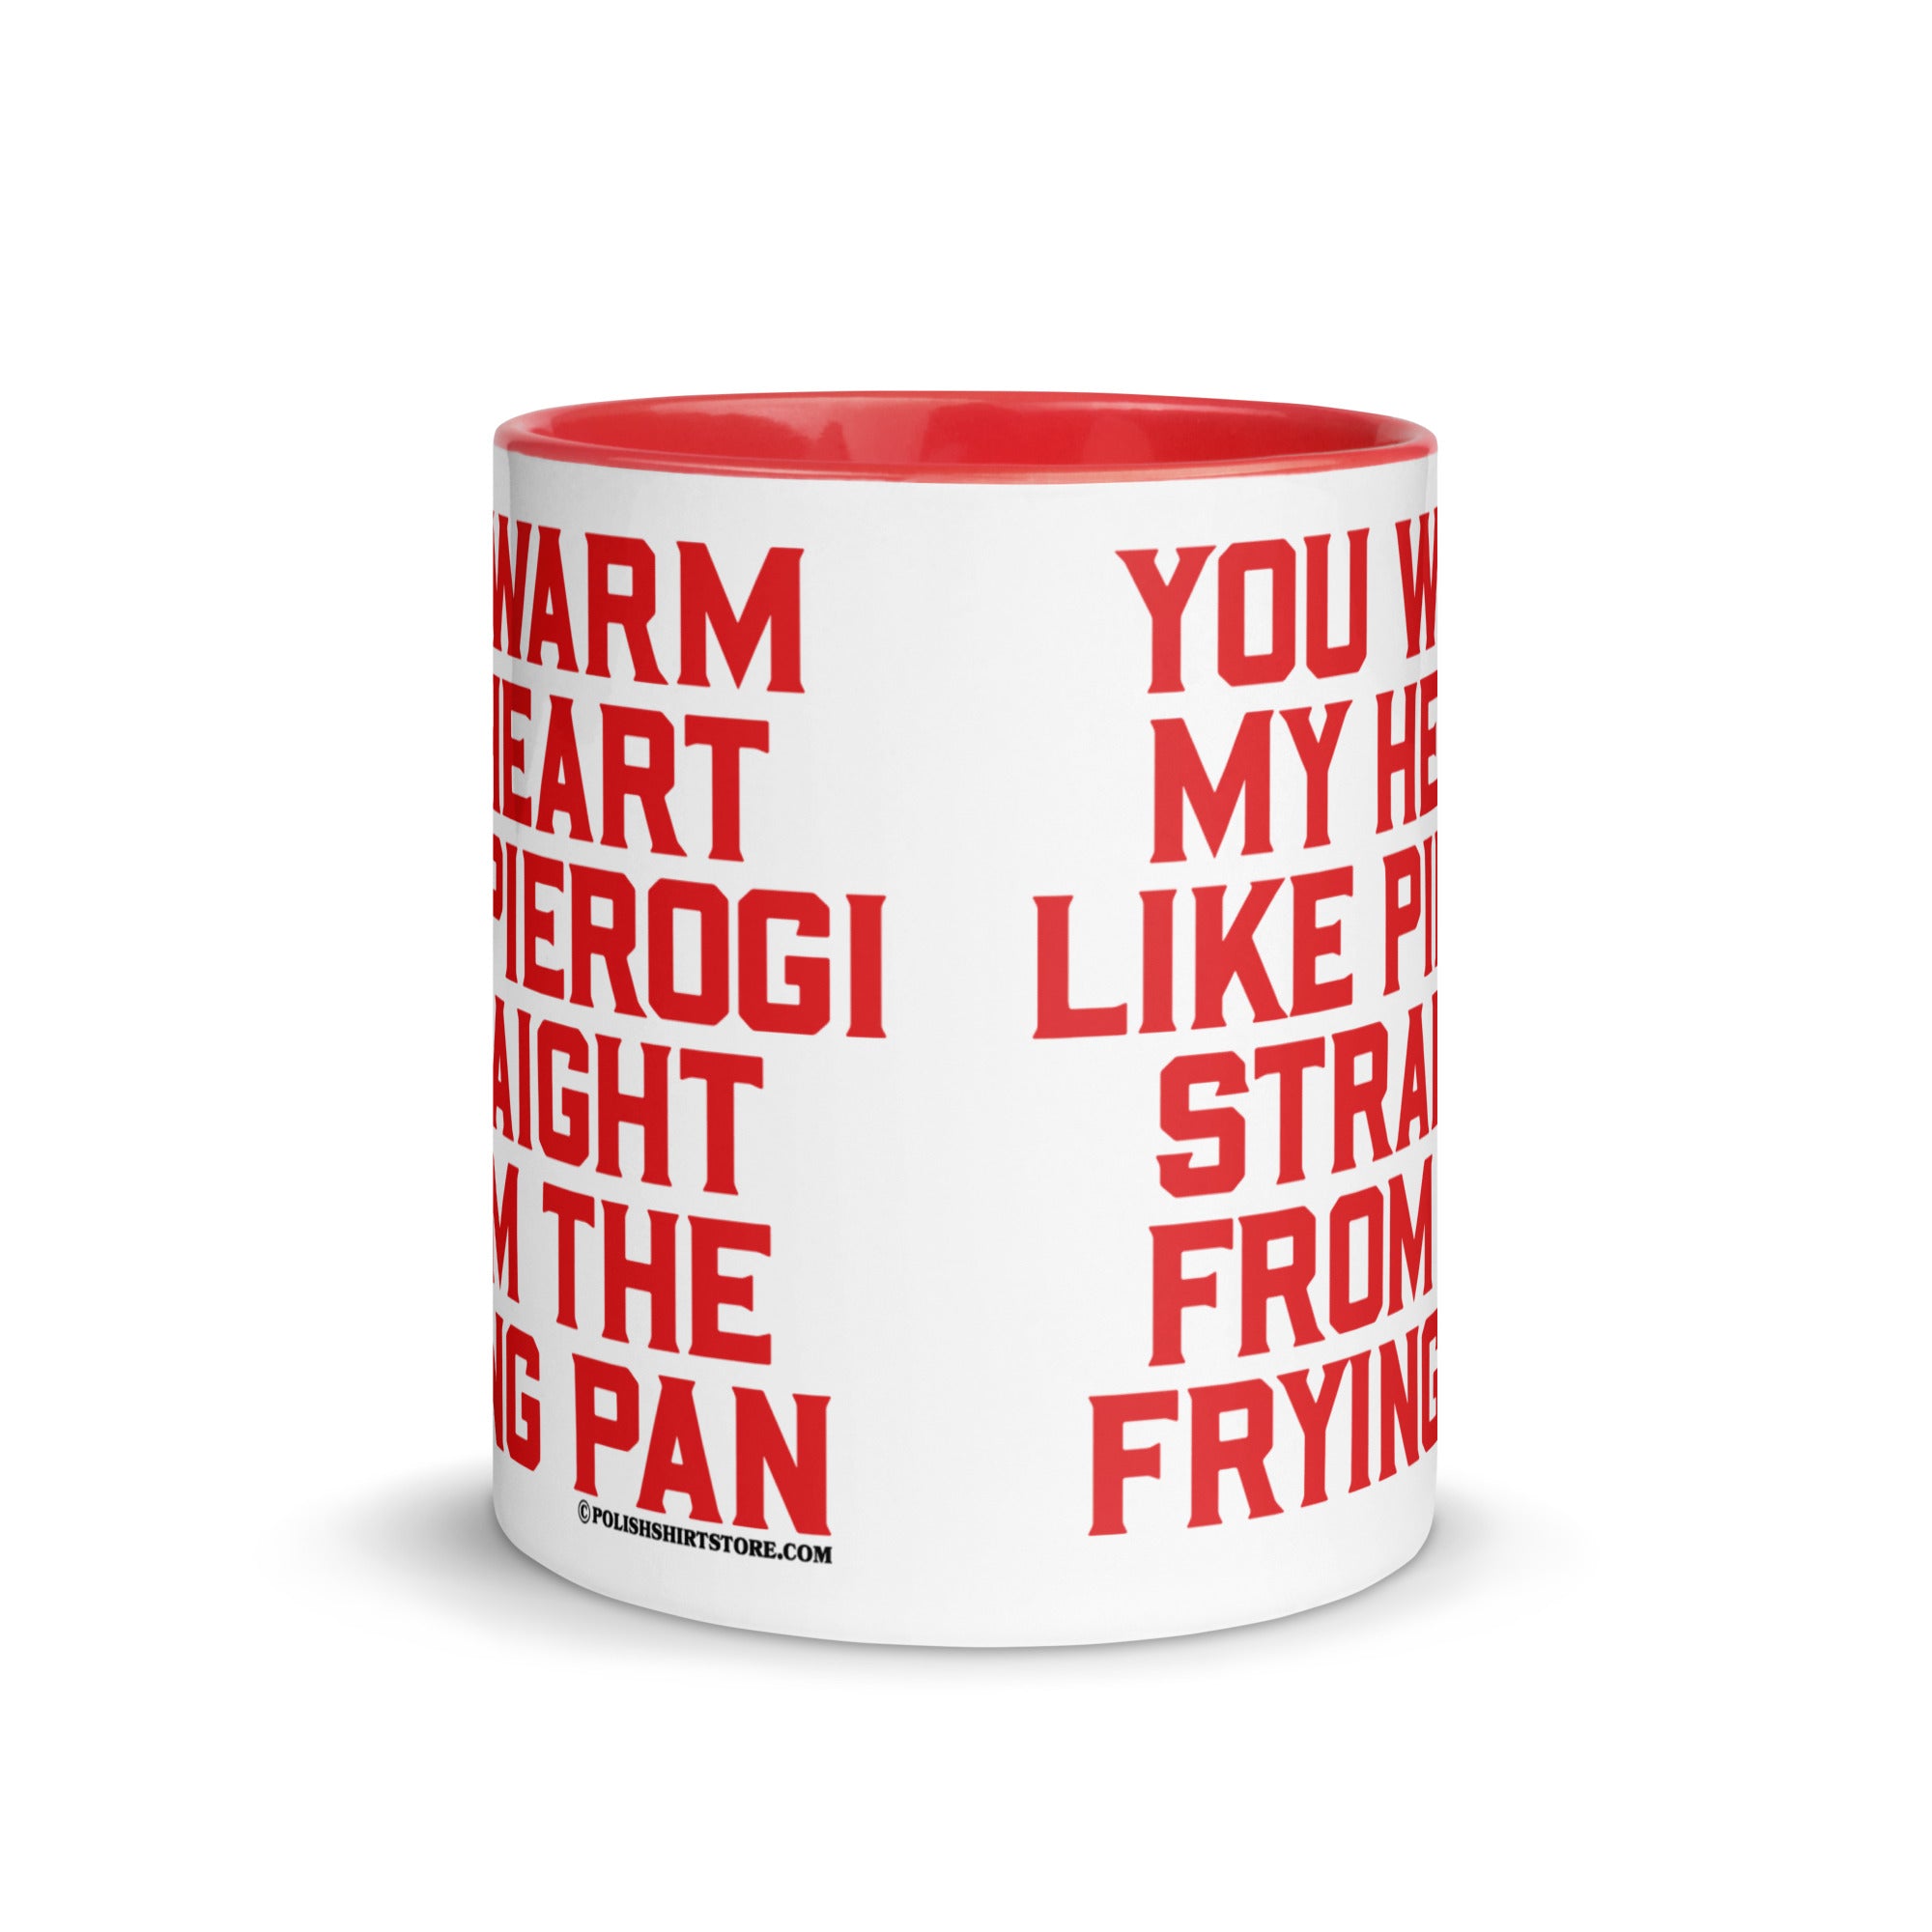 You Warm My Heart Like Pierogi Straight From The Frying Pan Coffee Mug with Color Inside  Polish Shirt Store   